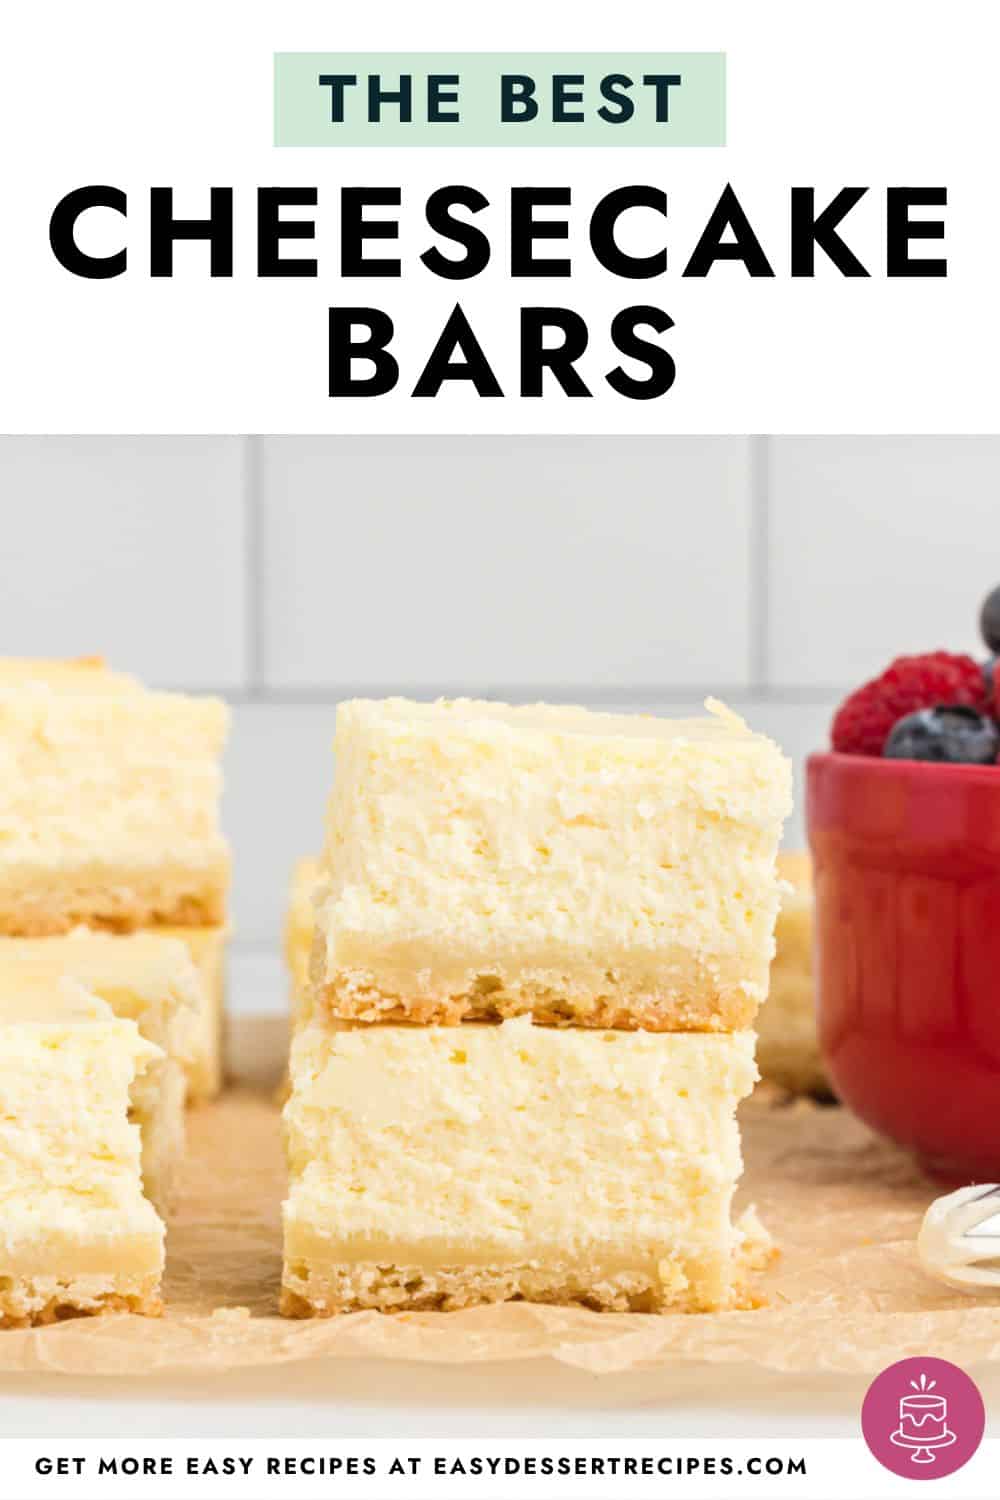 The best cheesecake bars.